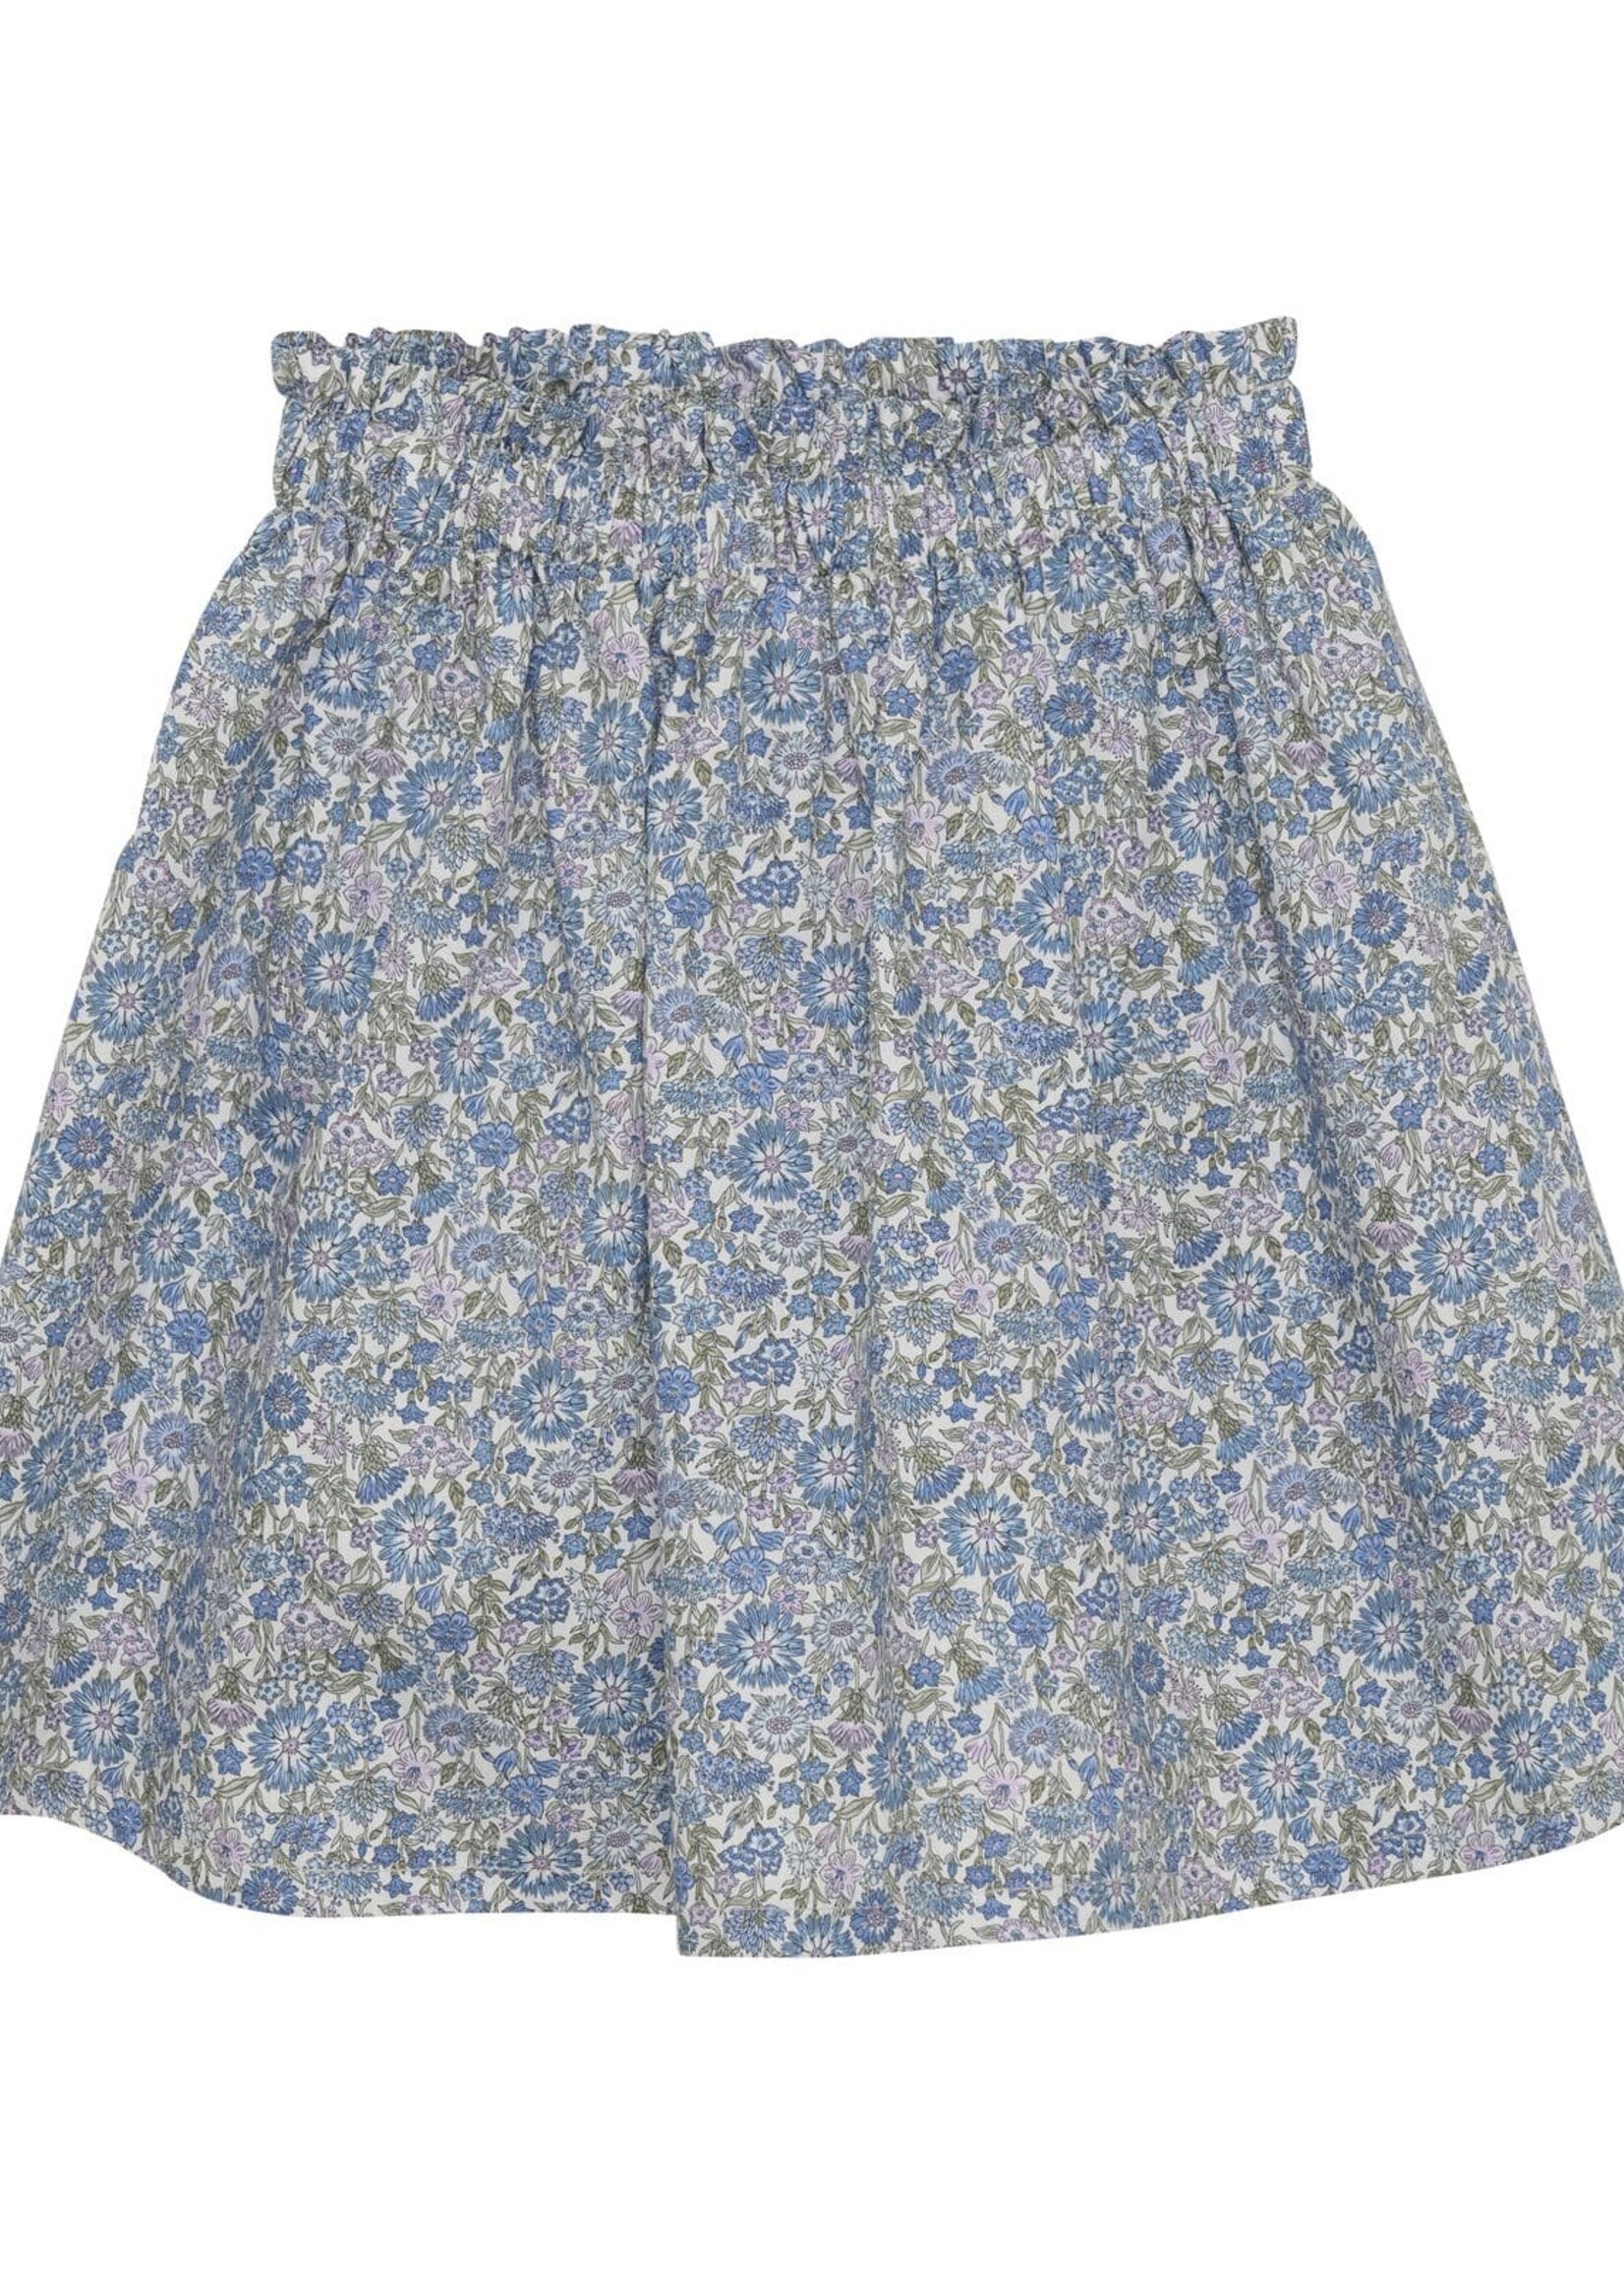 Huttelihut Skirt in Liberty fabric May field - Huttelihut